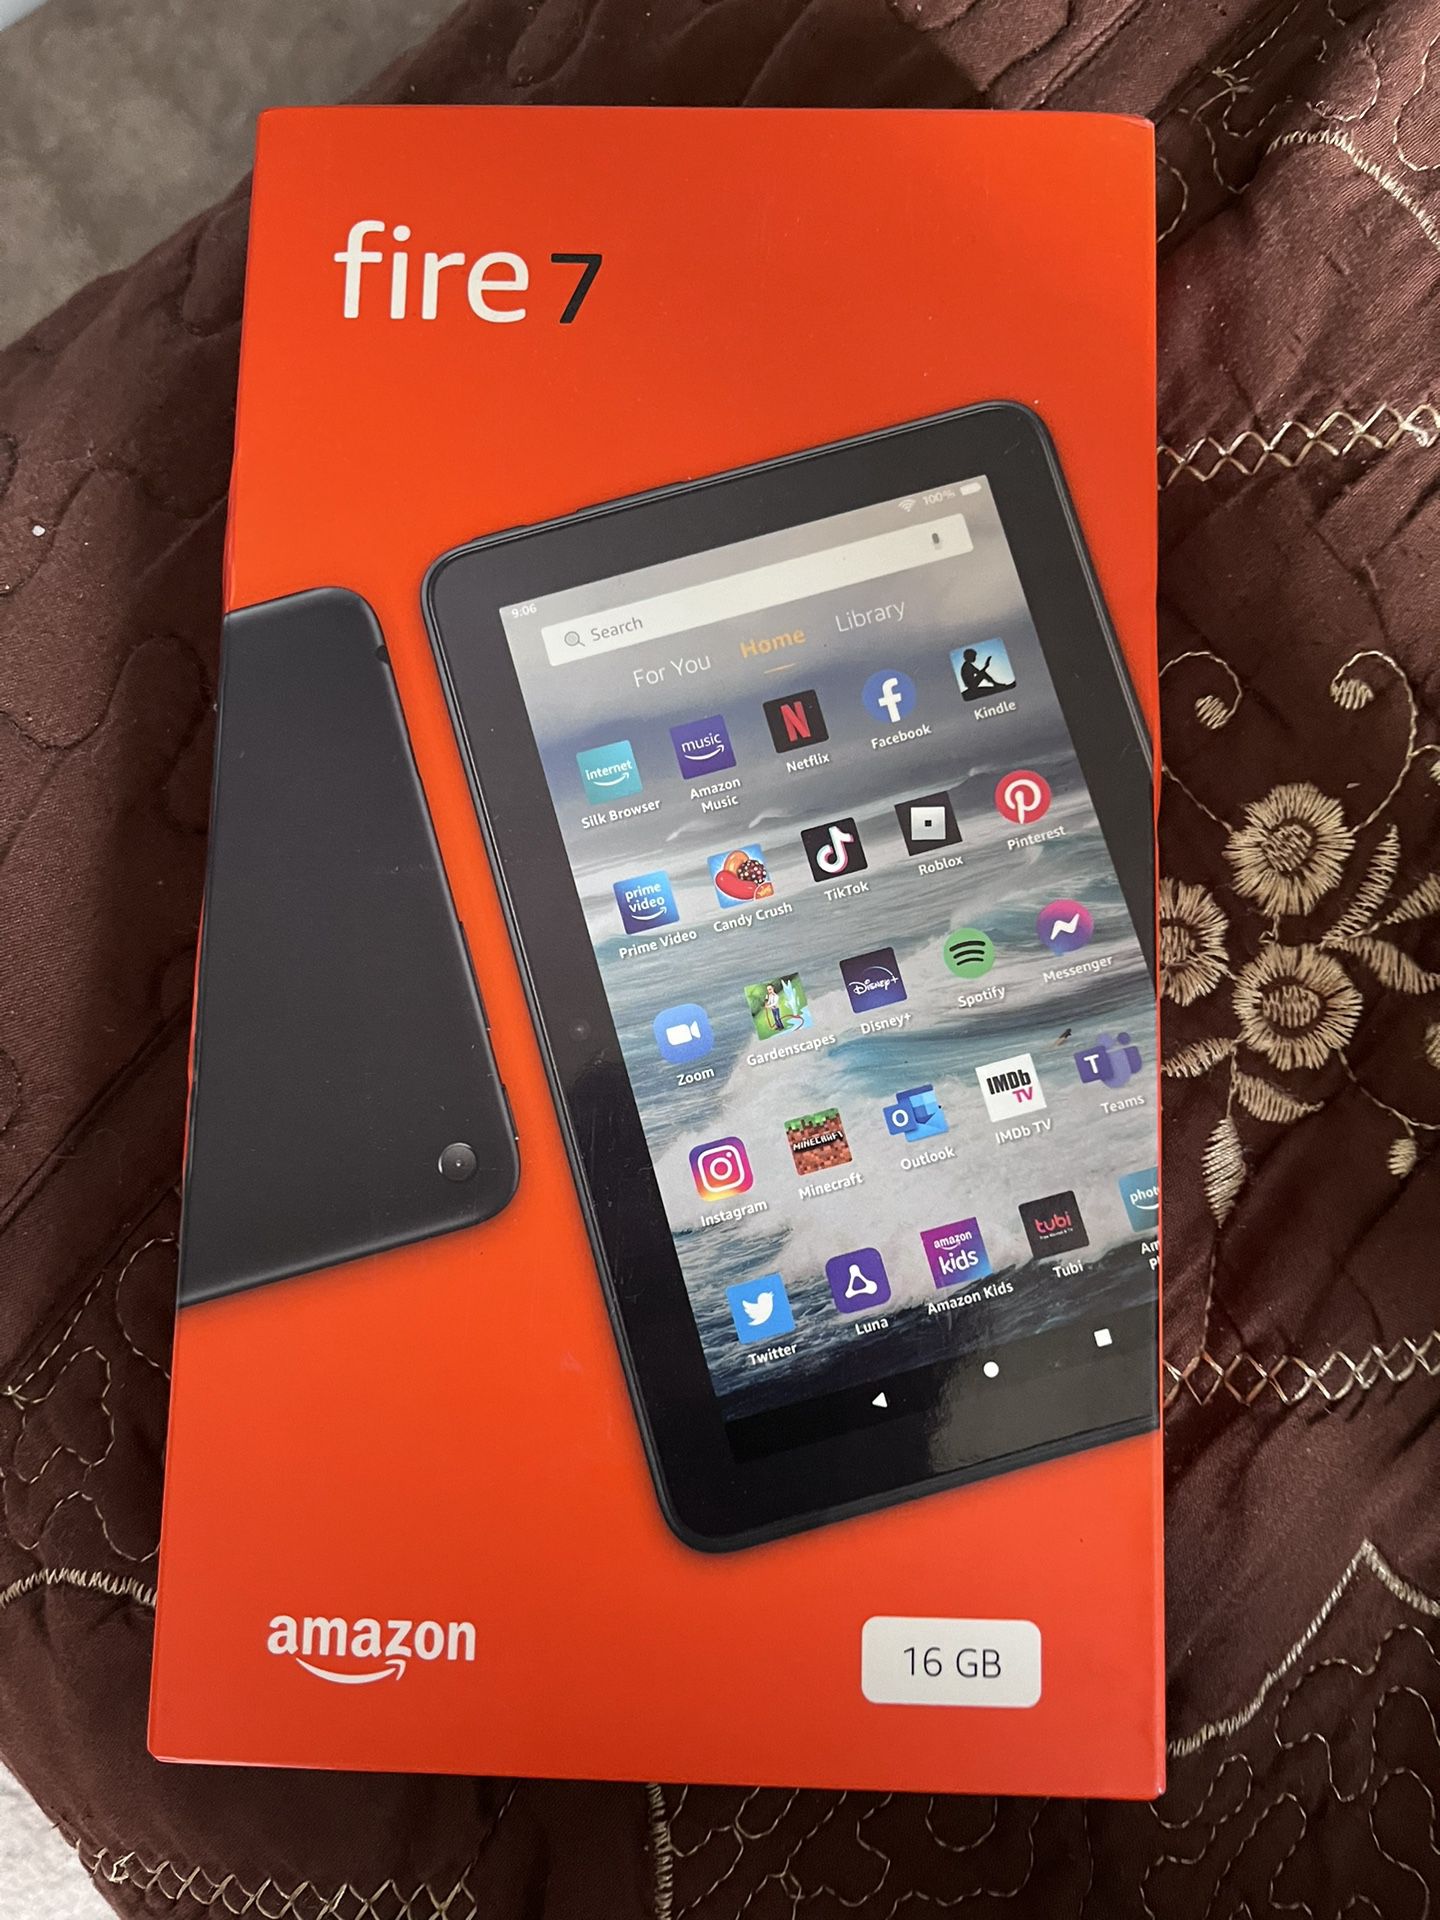 Fire 7 Tablet (Amazon)